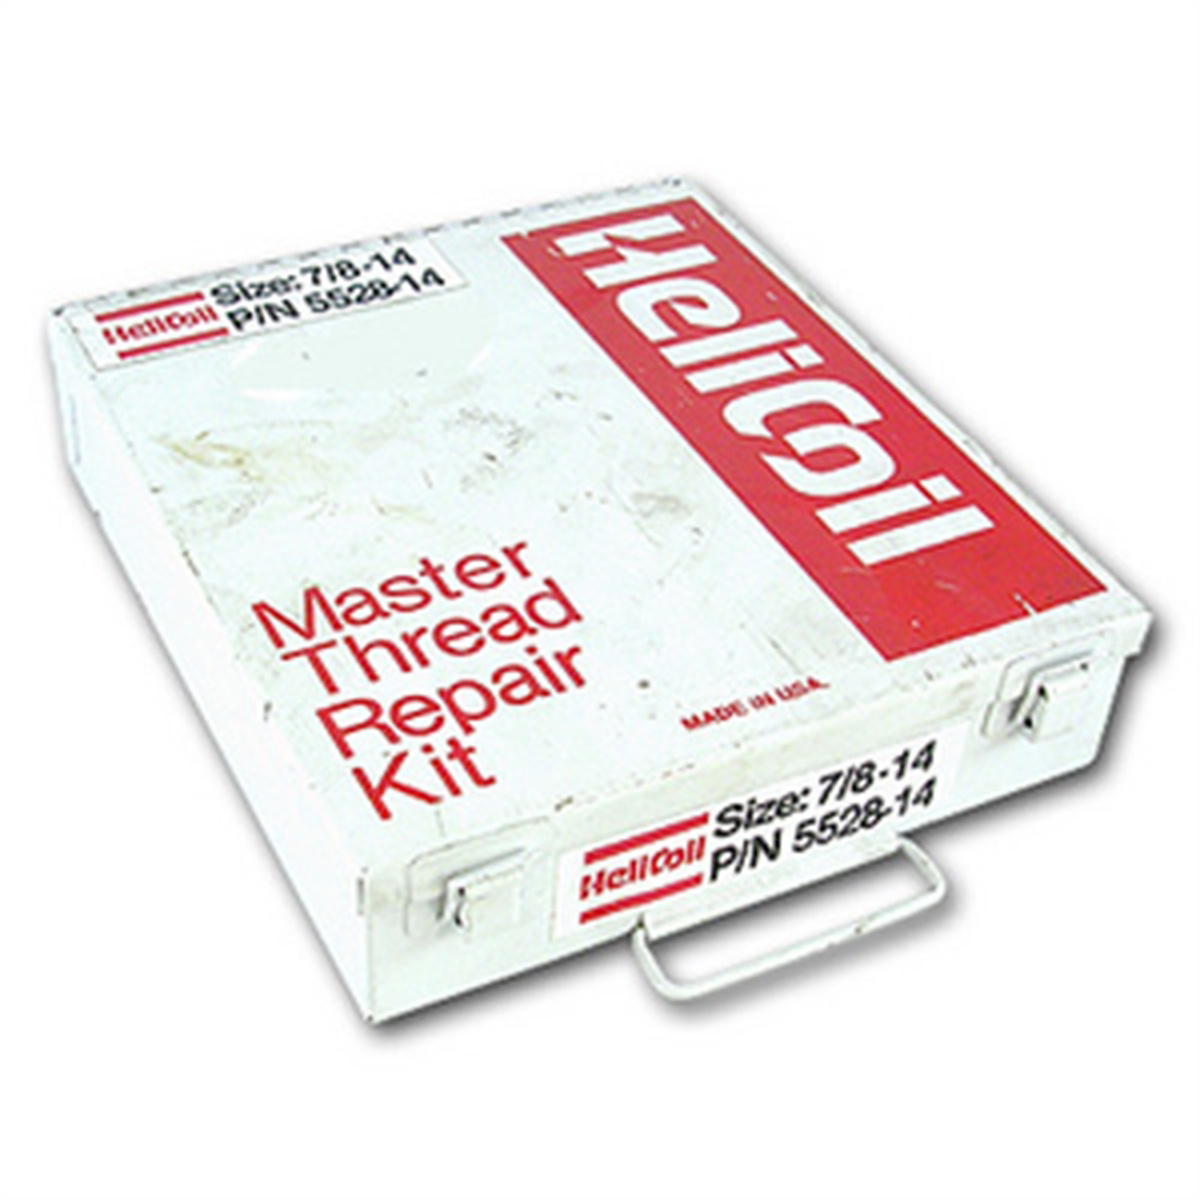 Inch Fine Thread Repair Kit - 7/8-14 x 1.312 HEL5528-14